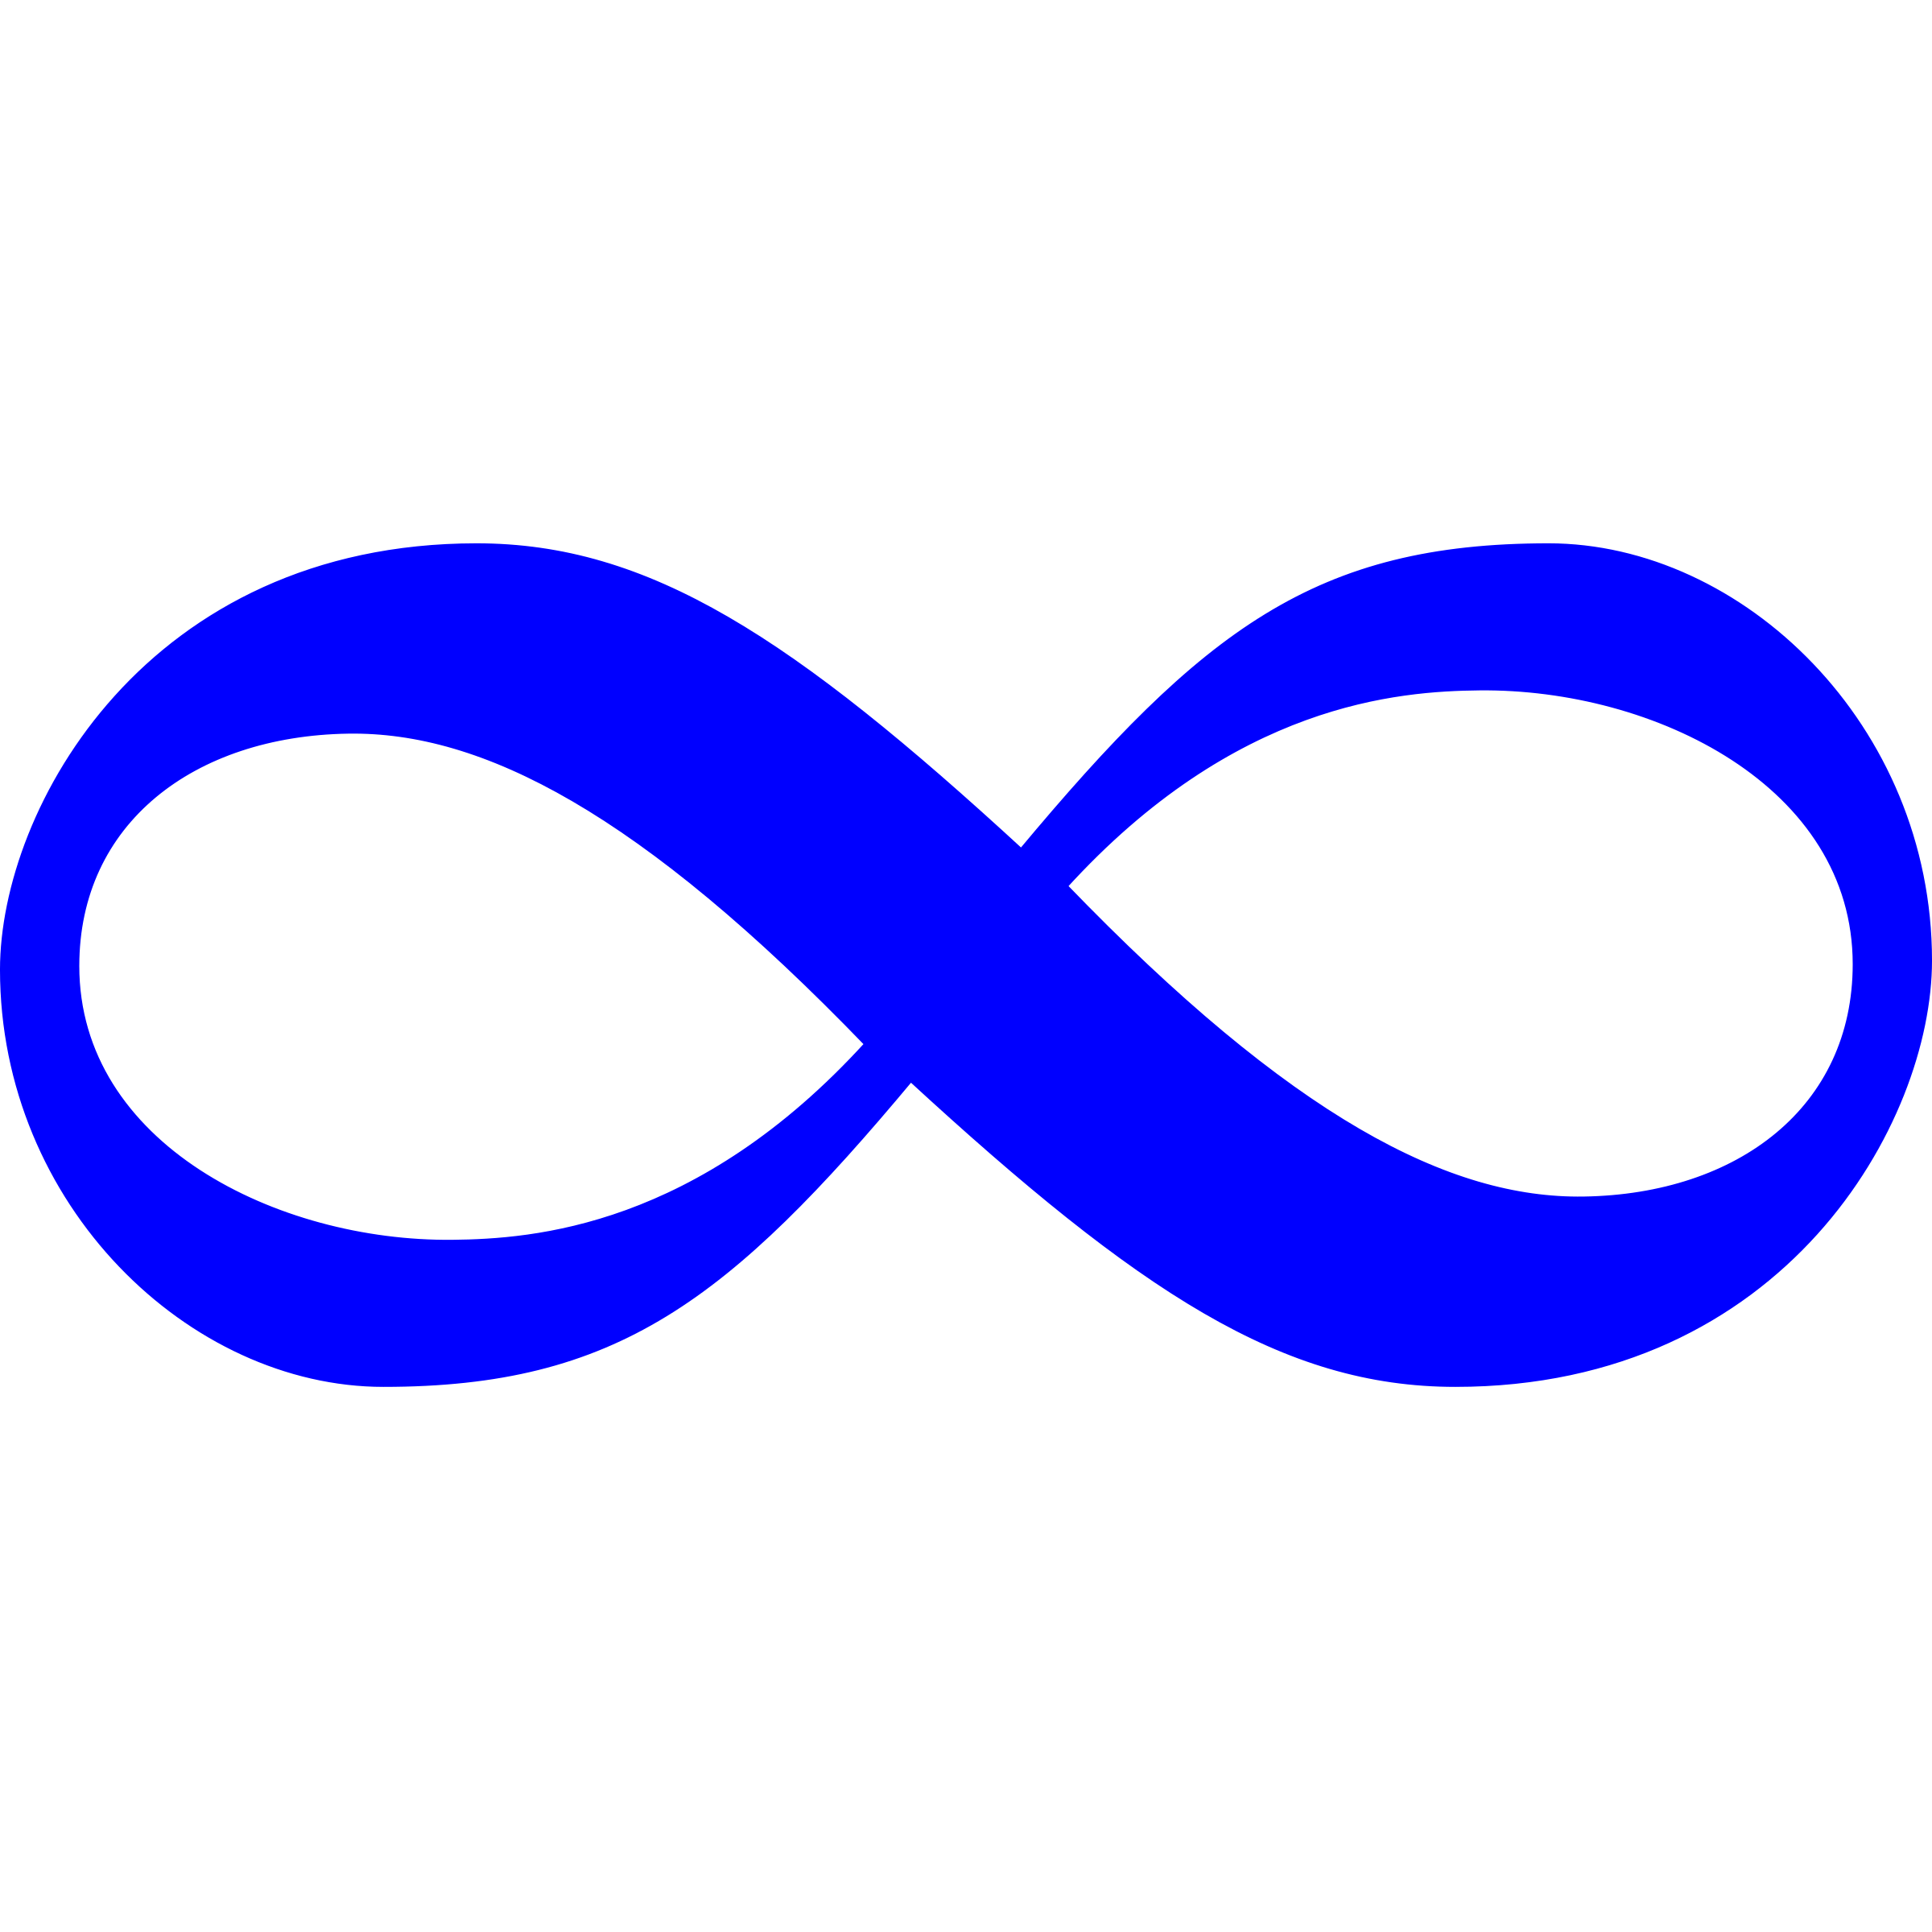 Infinity Symbol PNG Image File